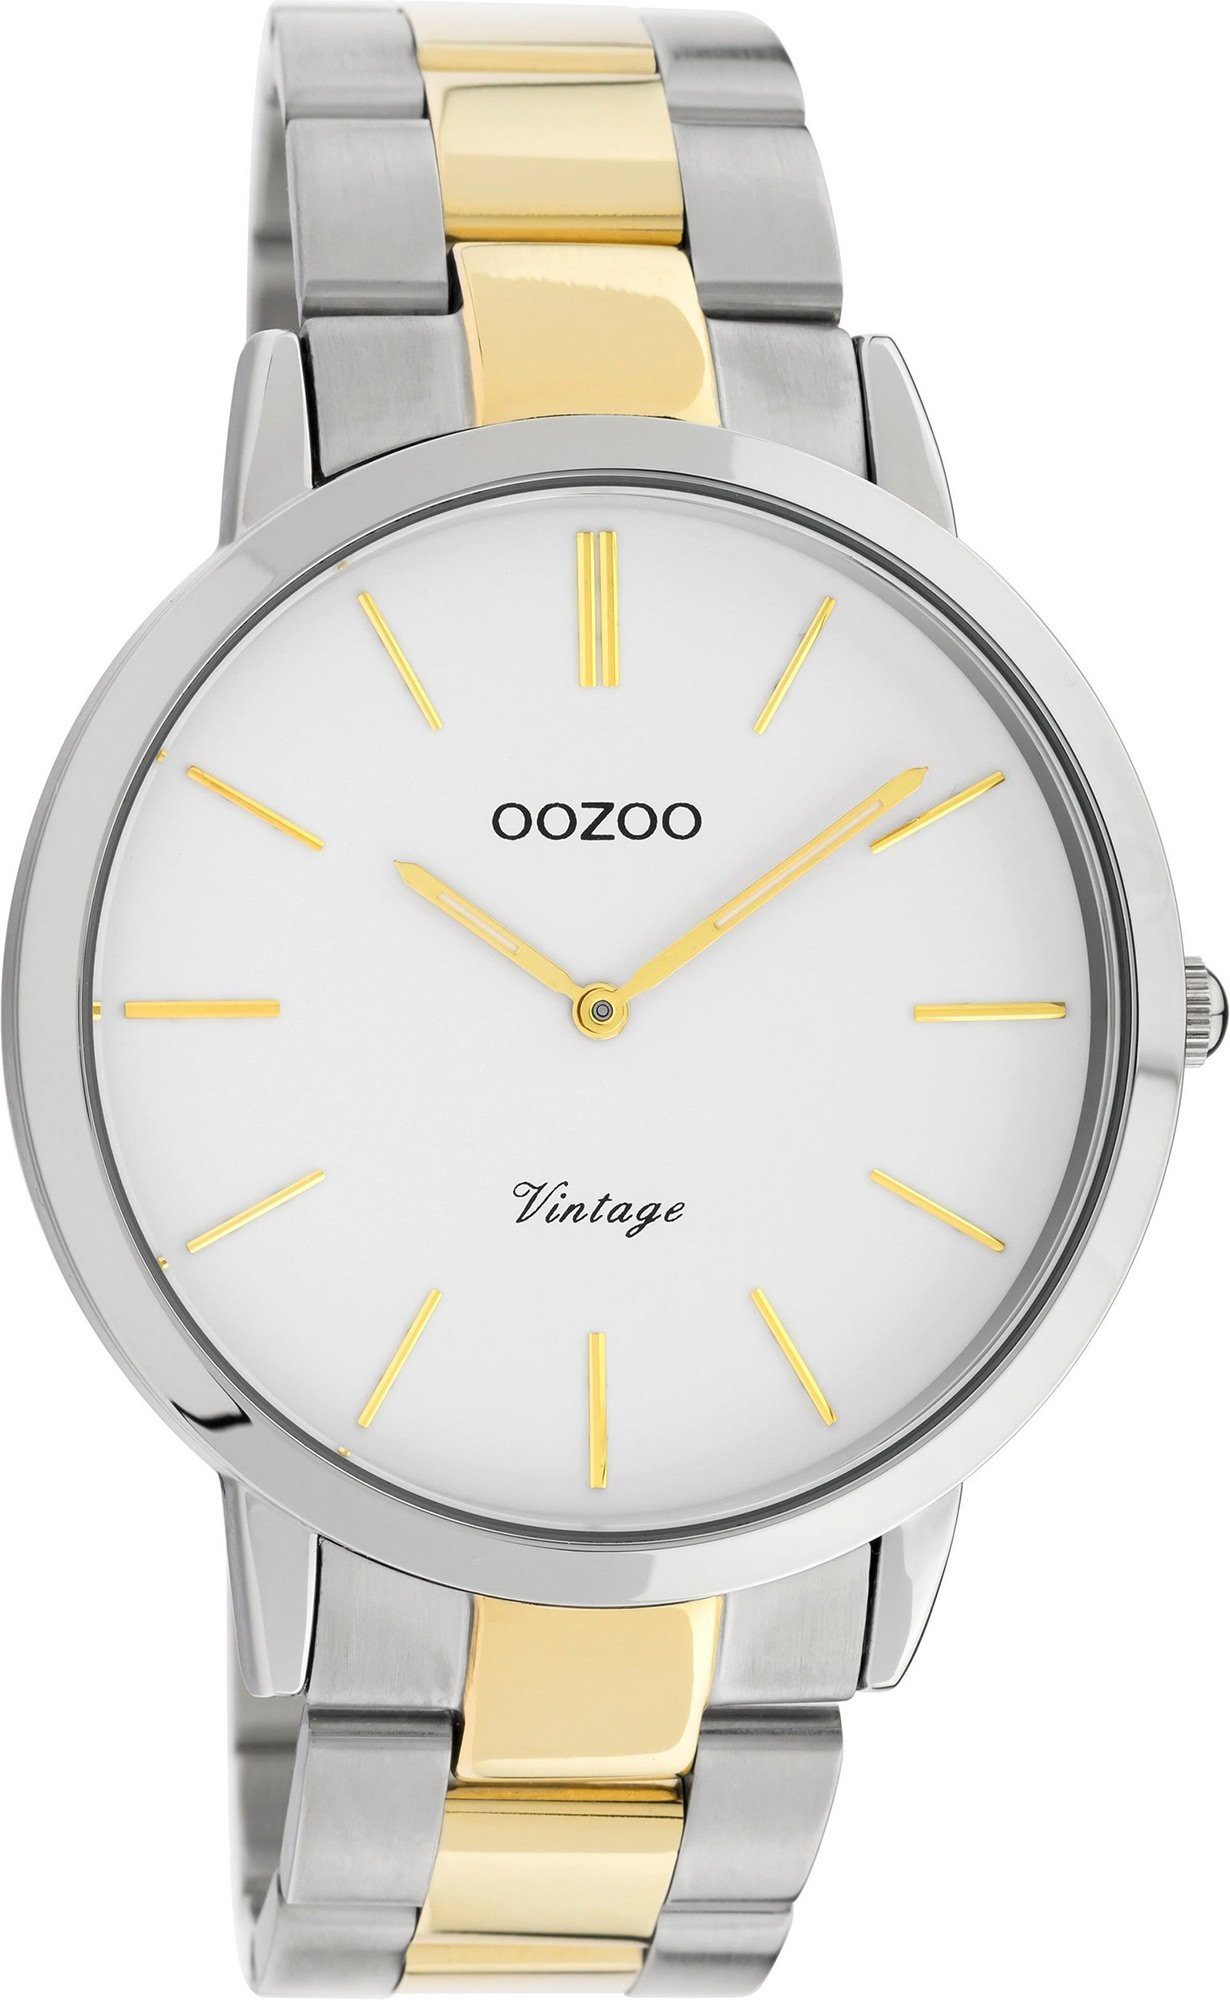 OOZOO Quarzuhr Oozoo Unisex Armbanduhr silber gold Quarz, Damen, Herrenuhr rund, groß (ca. 42mm) Edelstahlarmband, Fashion-Style